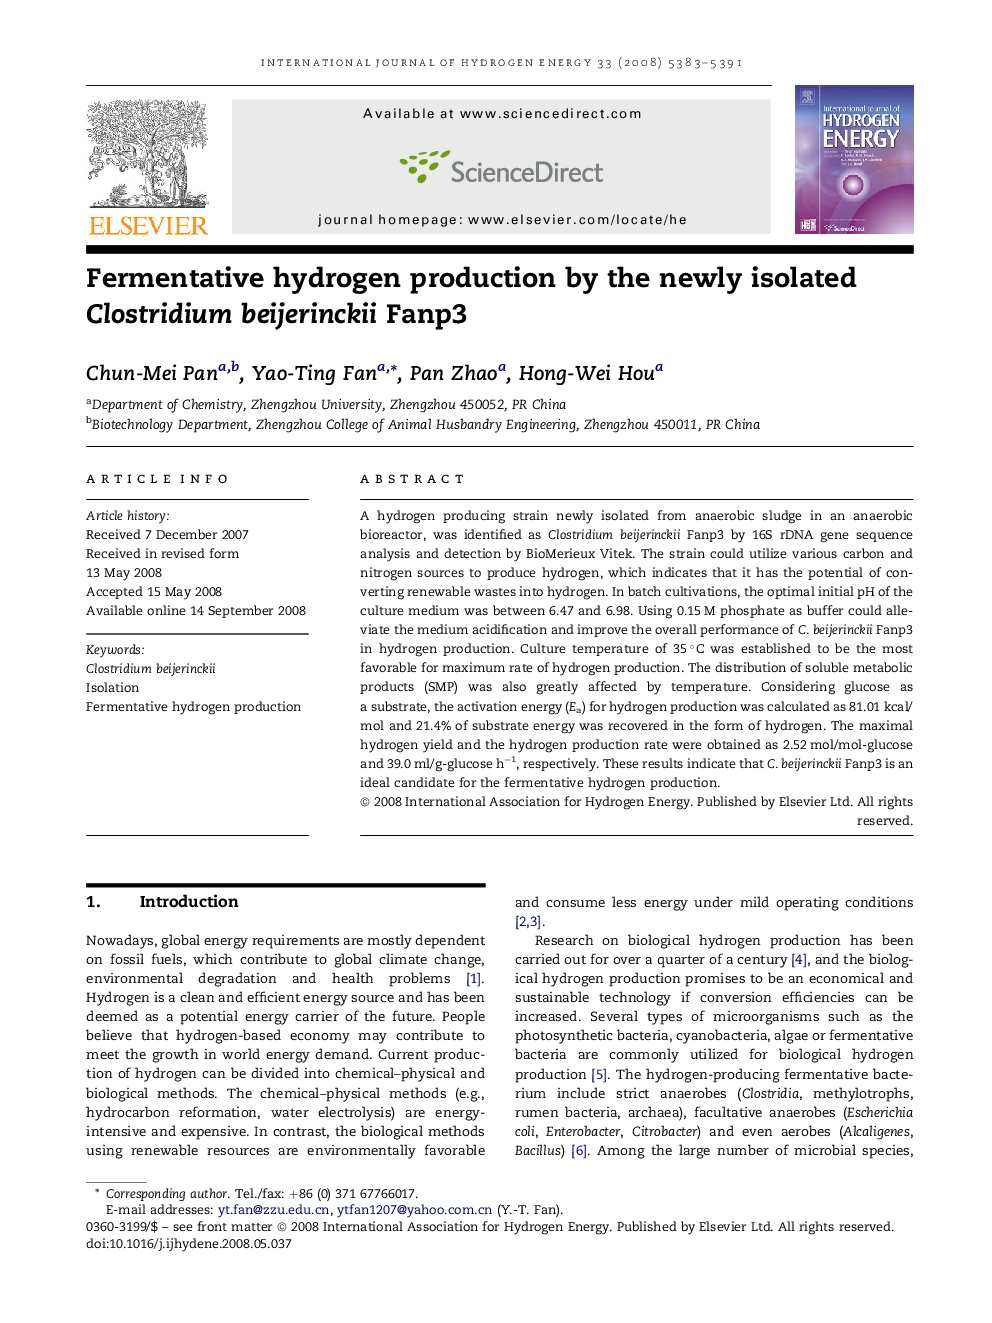 Fermentative hydrogen production by the newly isolated Clostridium beijerinckii Fanp3